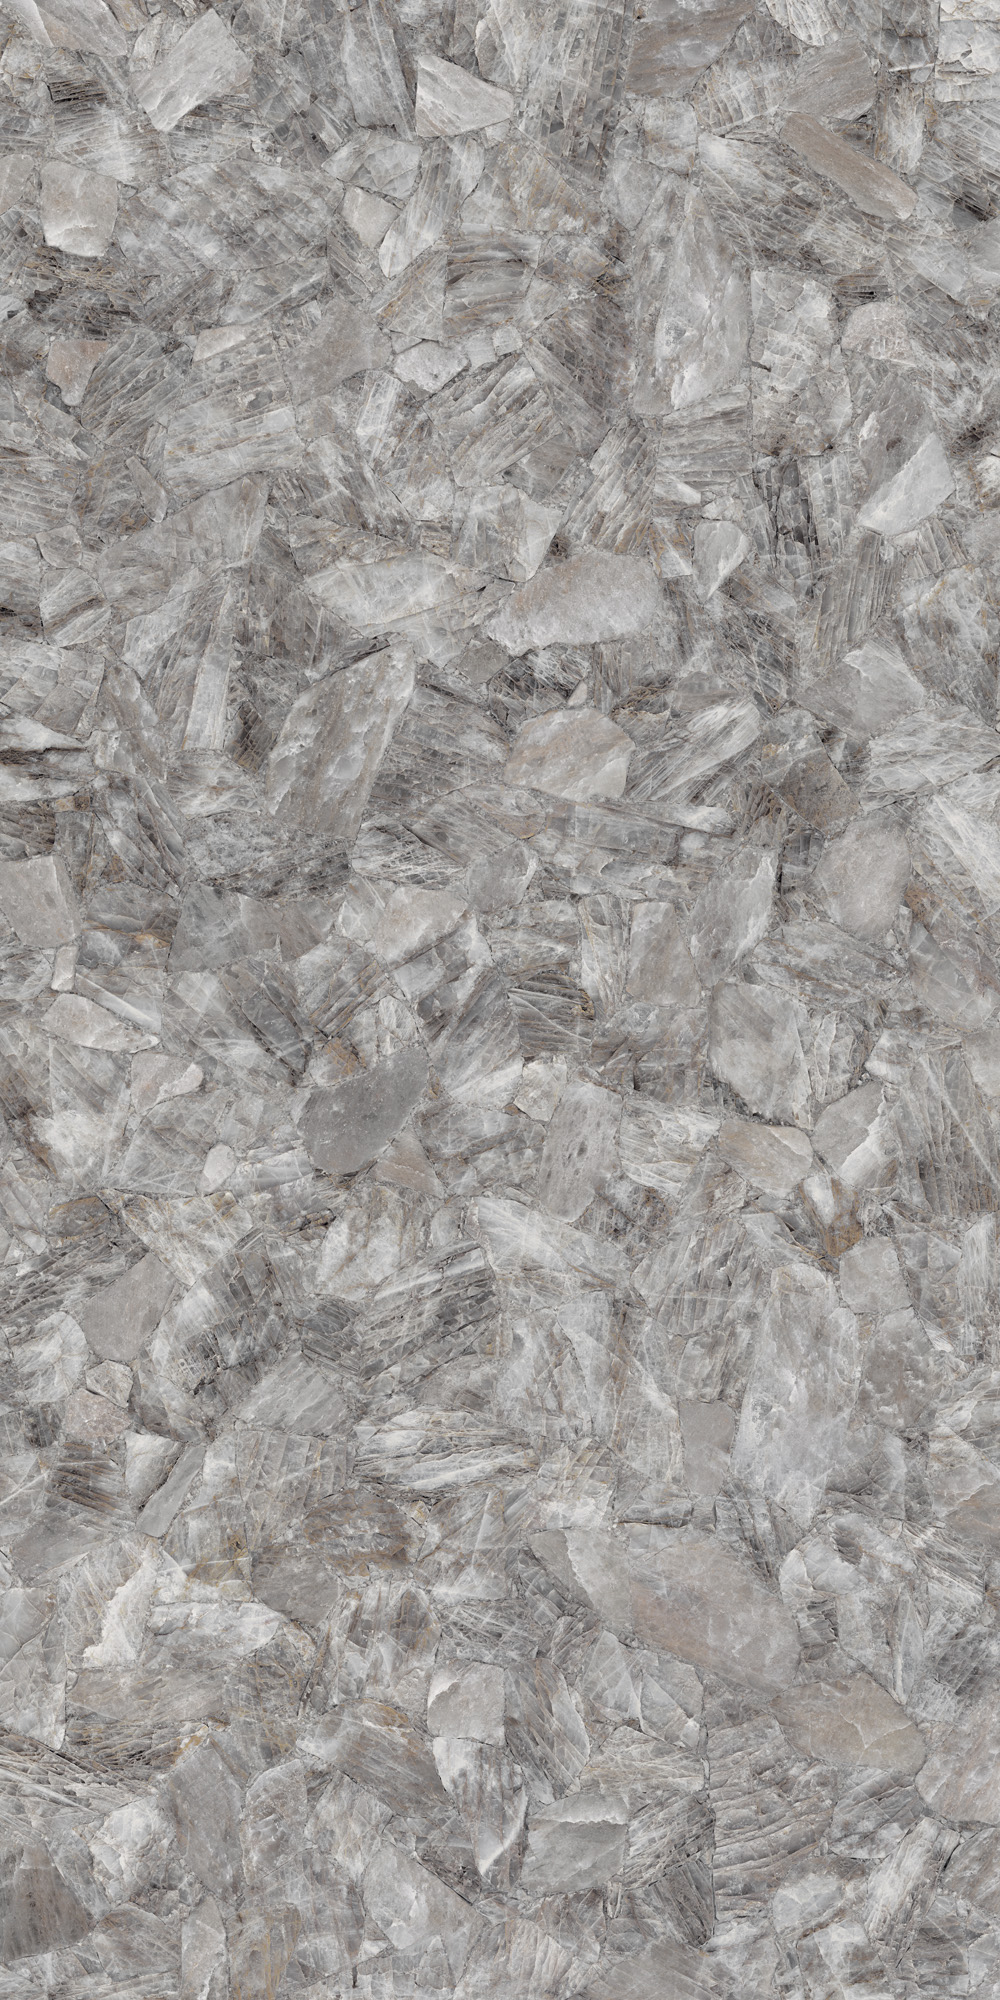 Rectangular Polished Smokey Grey Marble Slab, Thickness: 15-20 mm